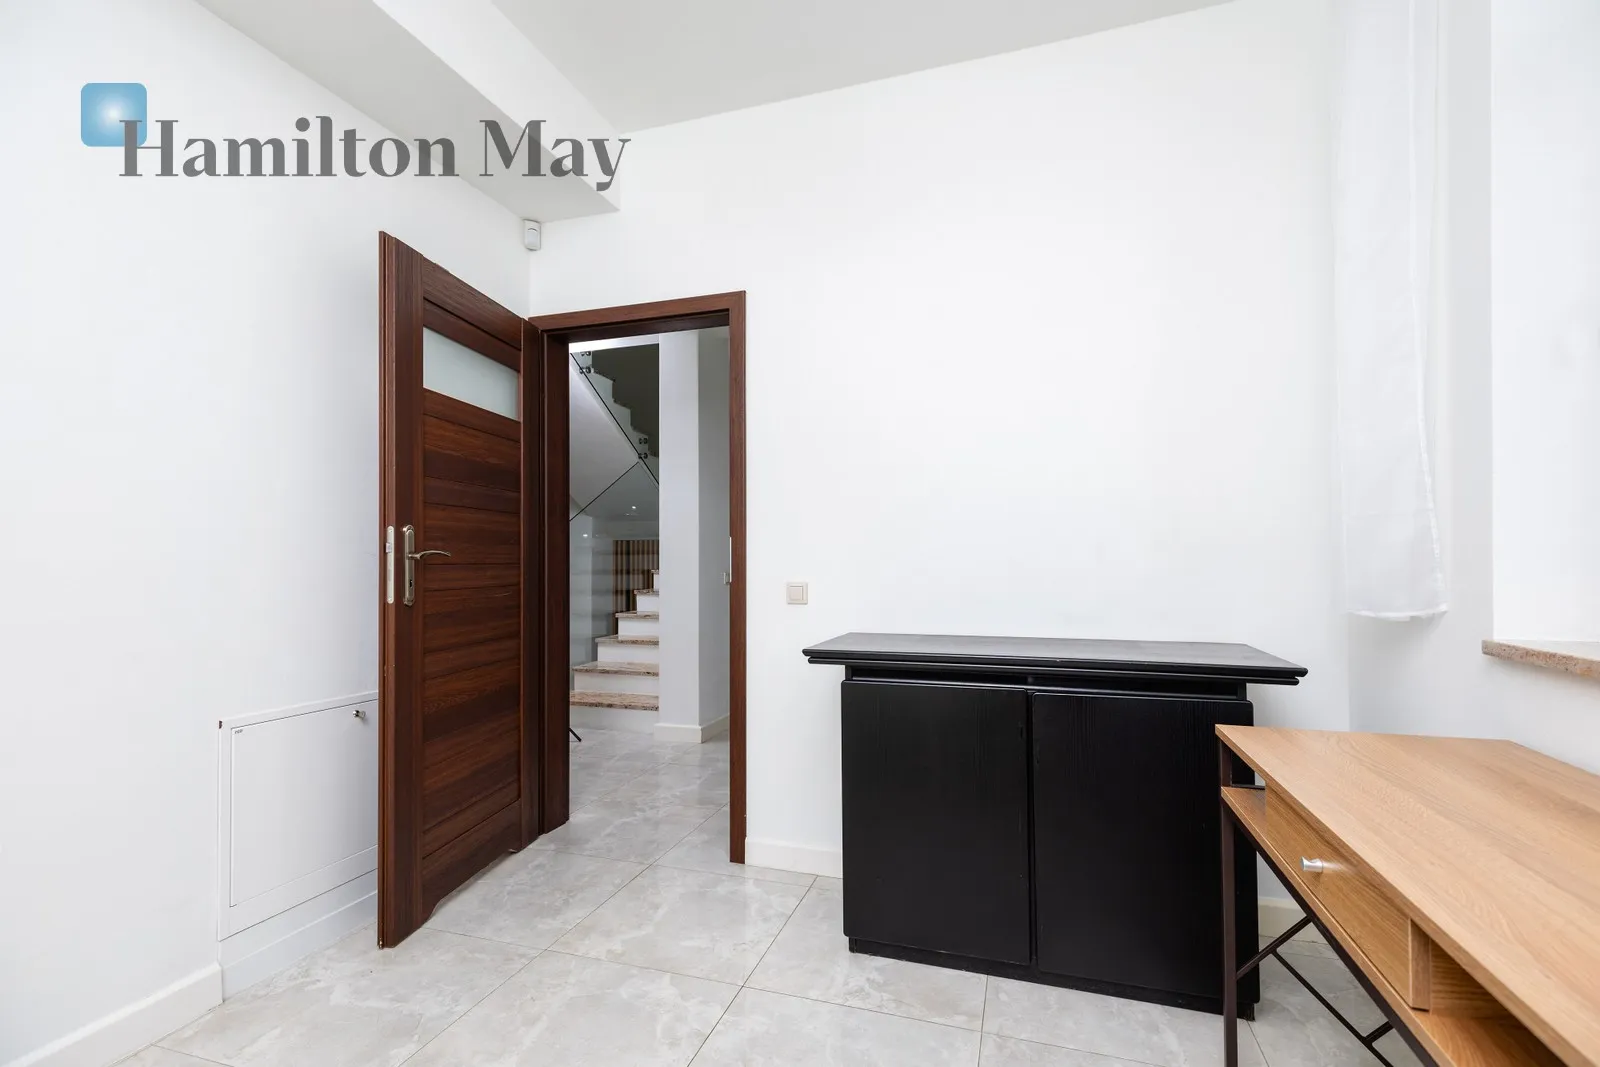 Bedrooms: 3 Bathrooms: 2 Plot size: 500m2 Price/m2: 44 PLN - slider